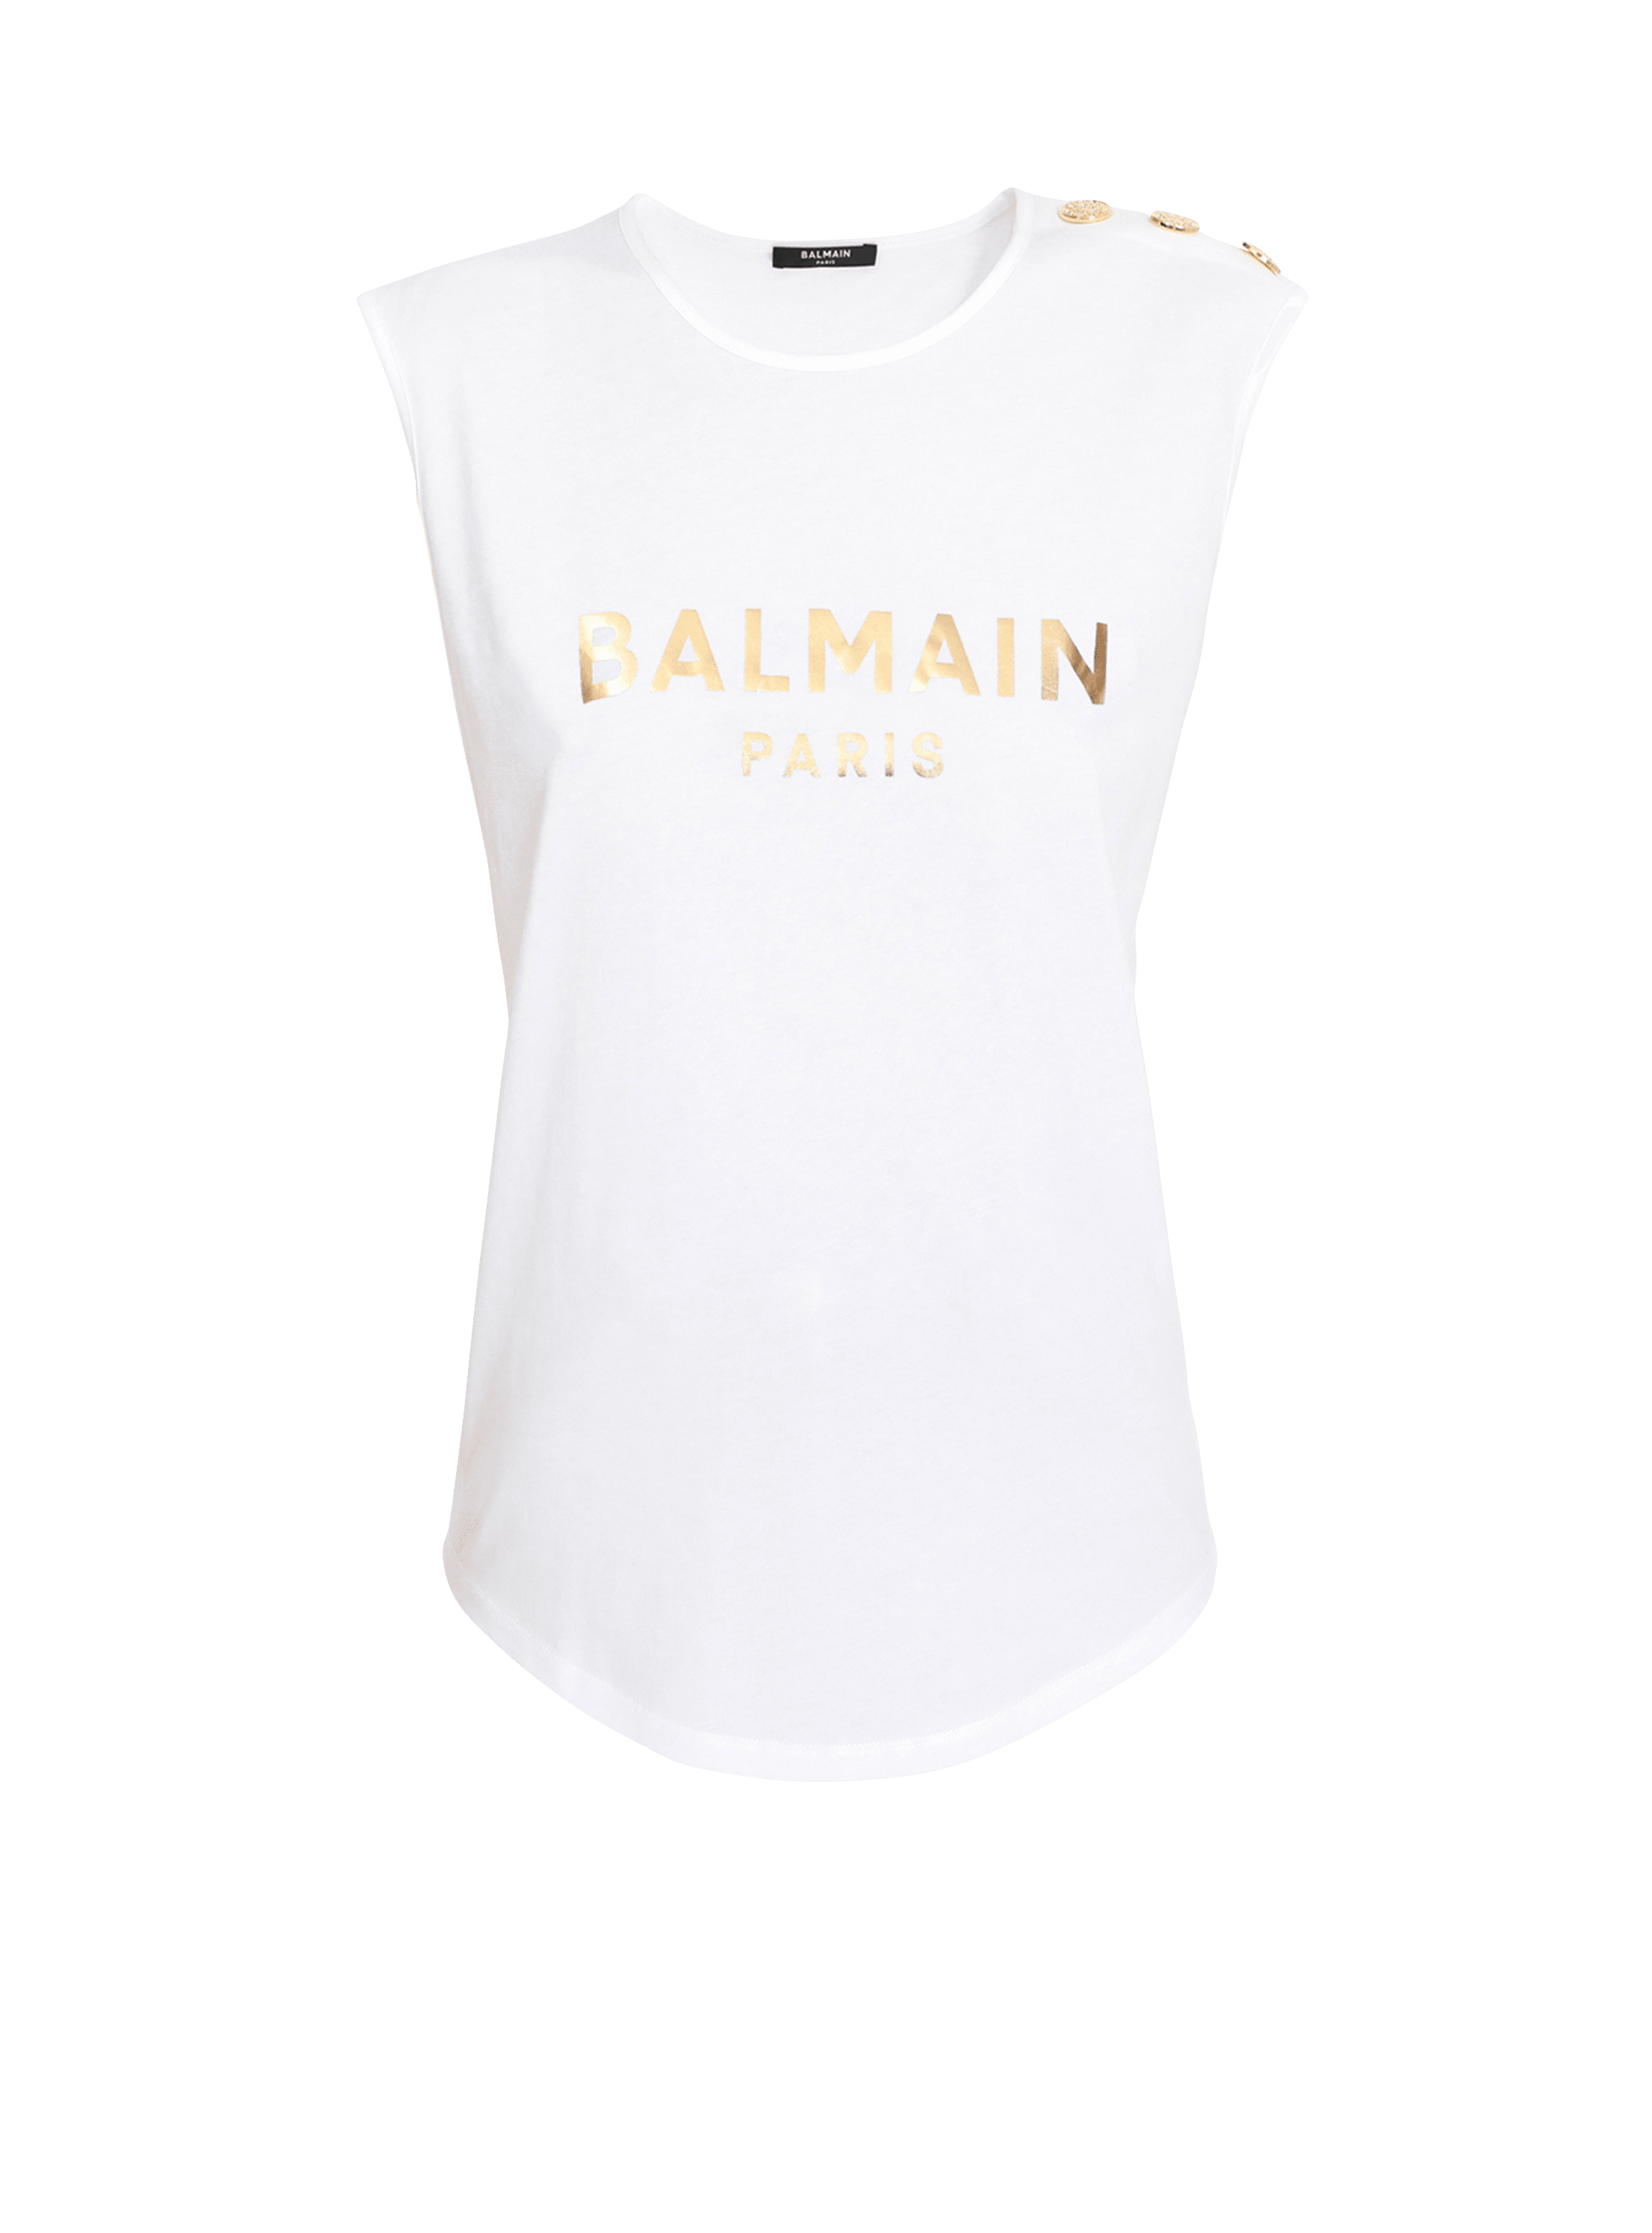 Camiseta de algodón con logotipo de Balmain estampado